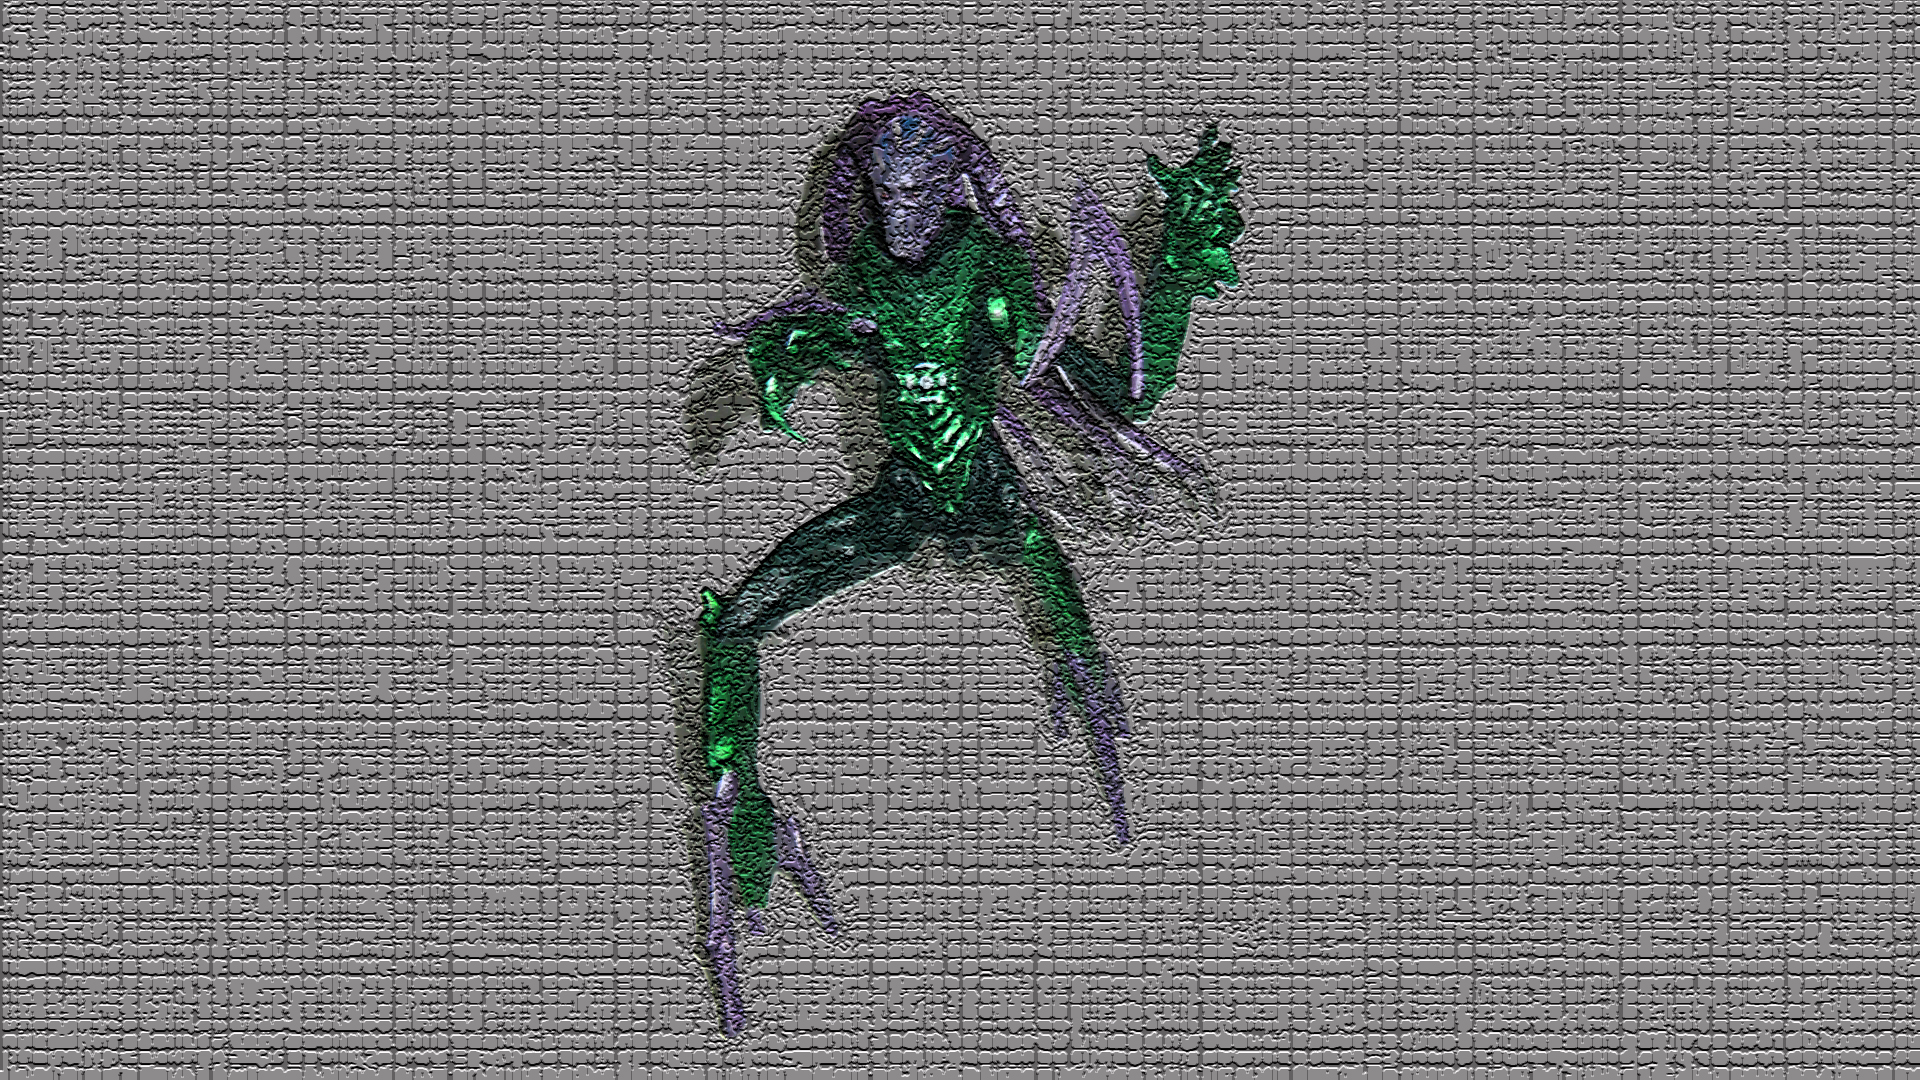 Comics Green Lantern Corps HD Wallpaper | Background Image